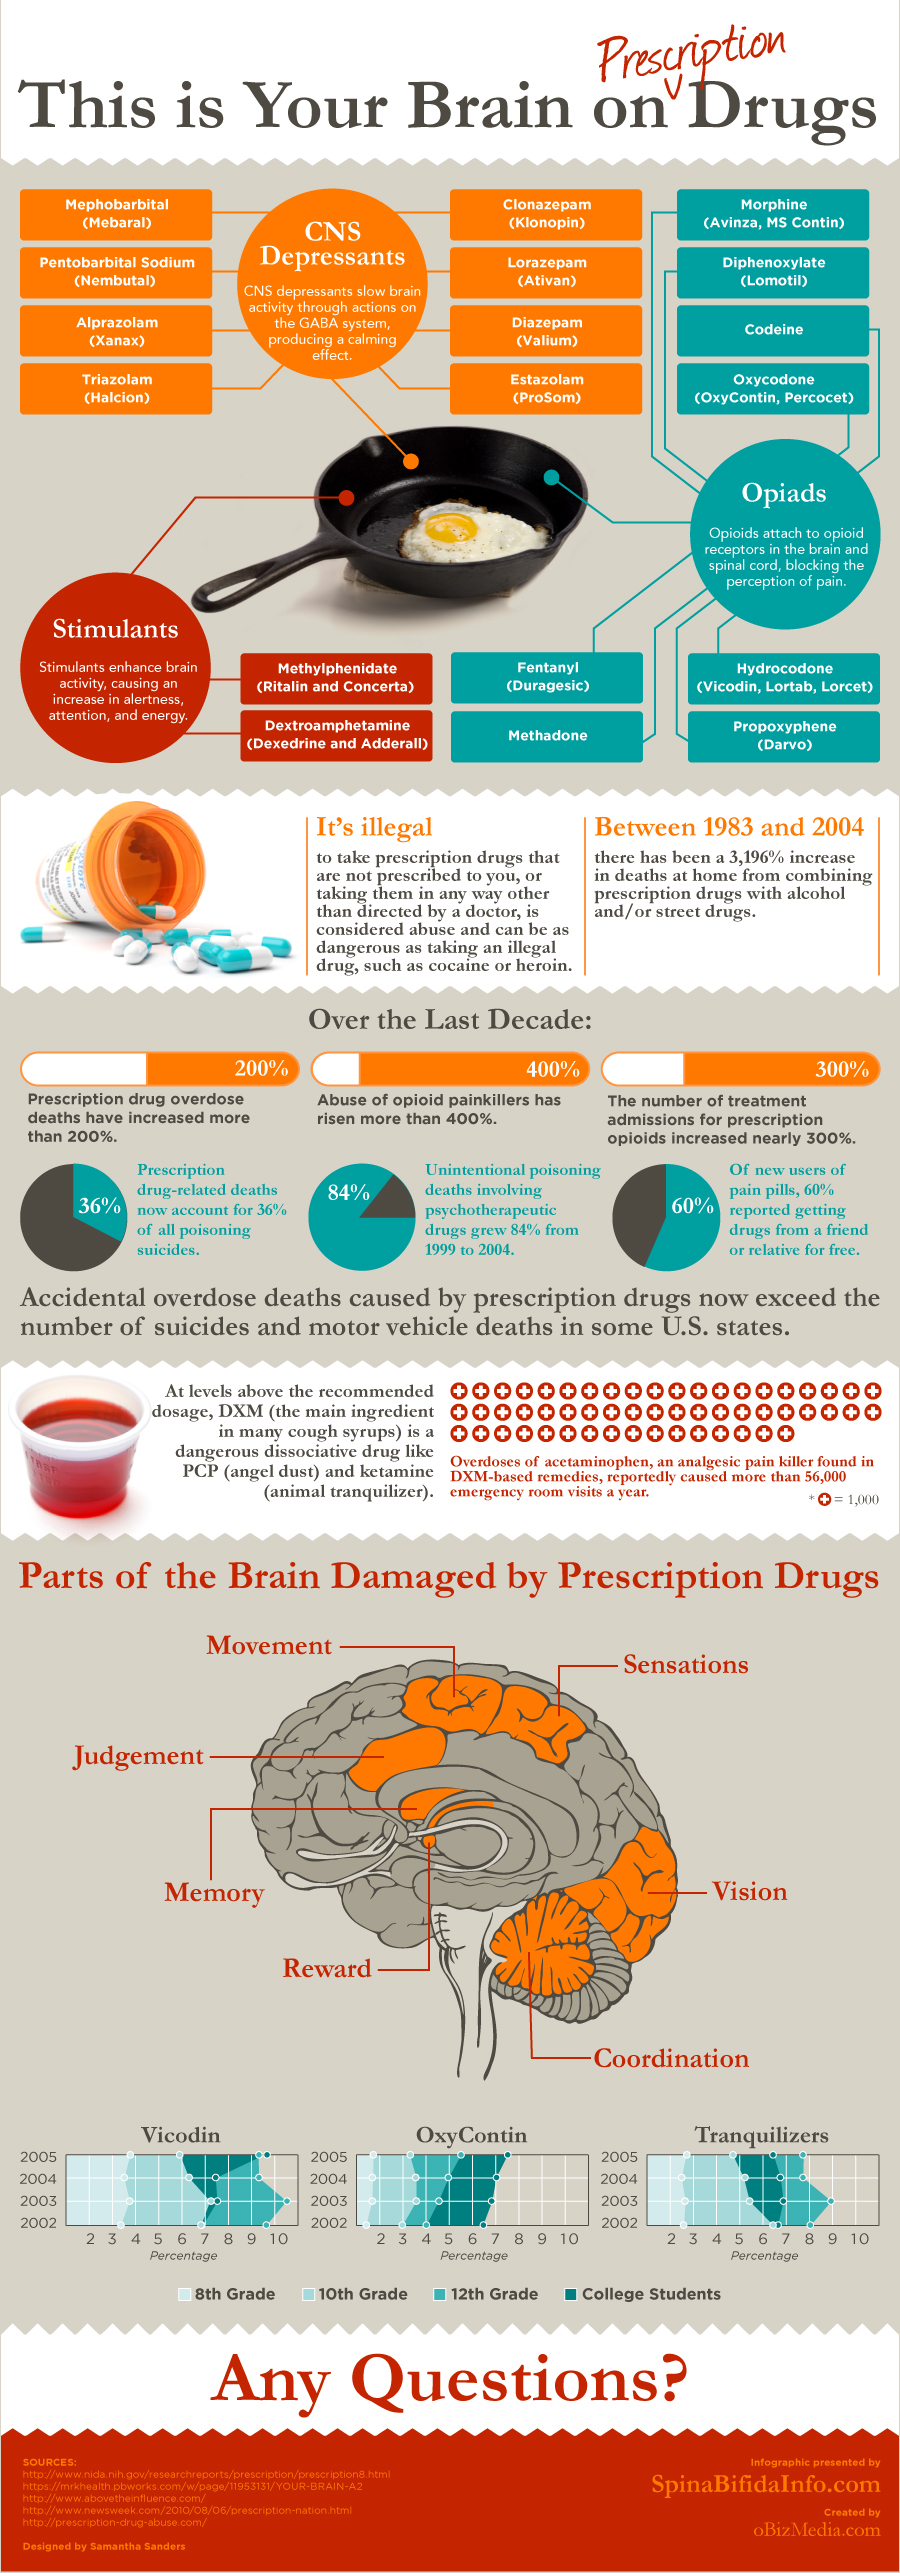 Your Brain on Prescription drugs